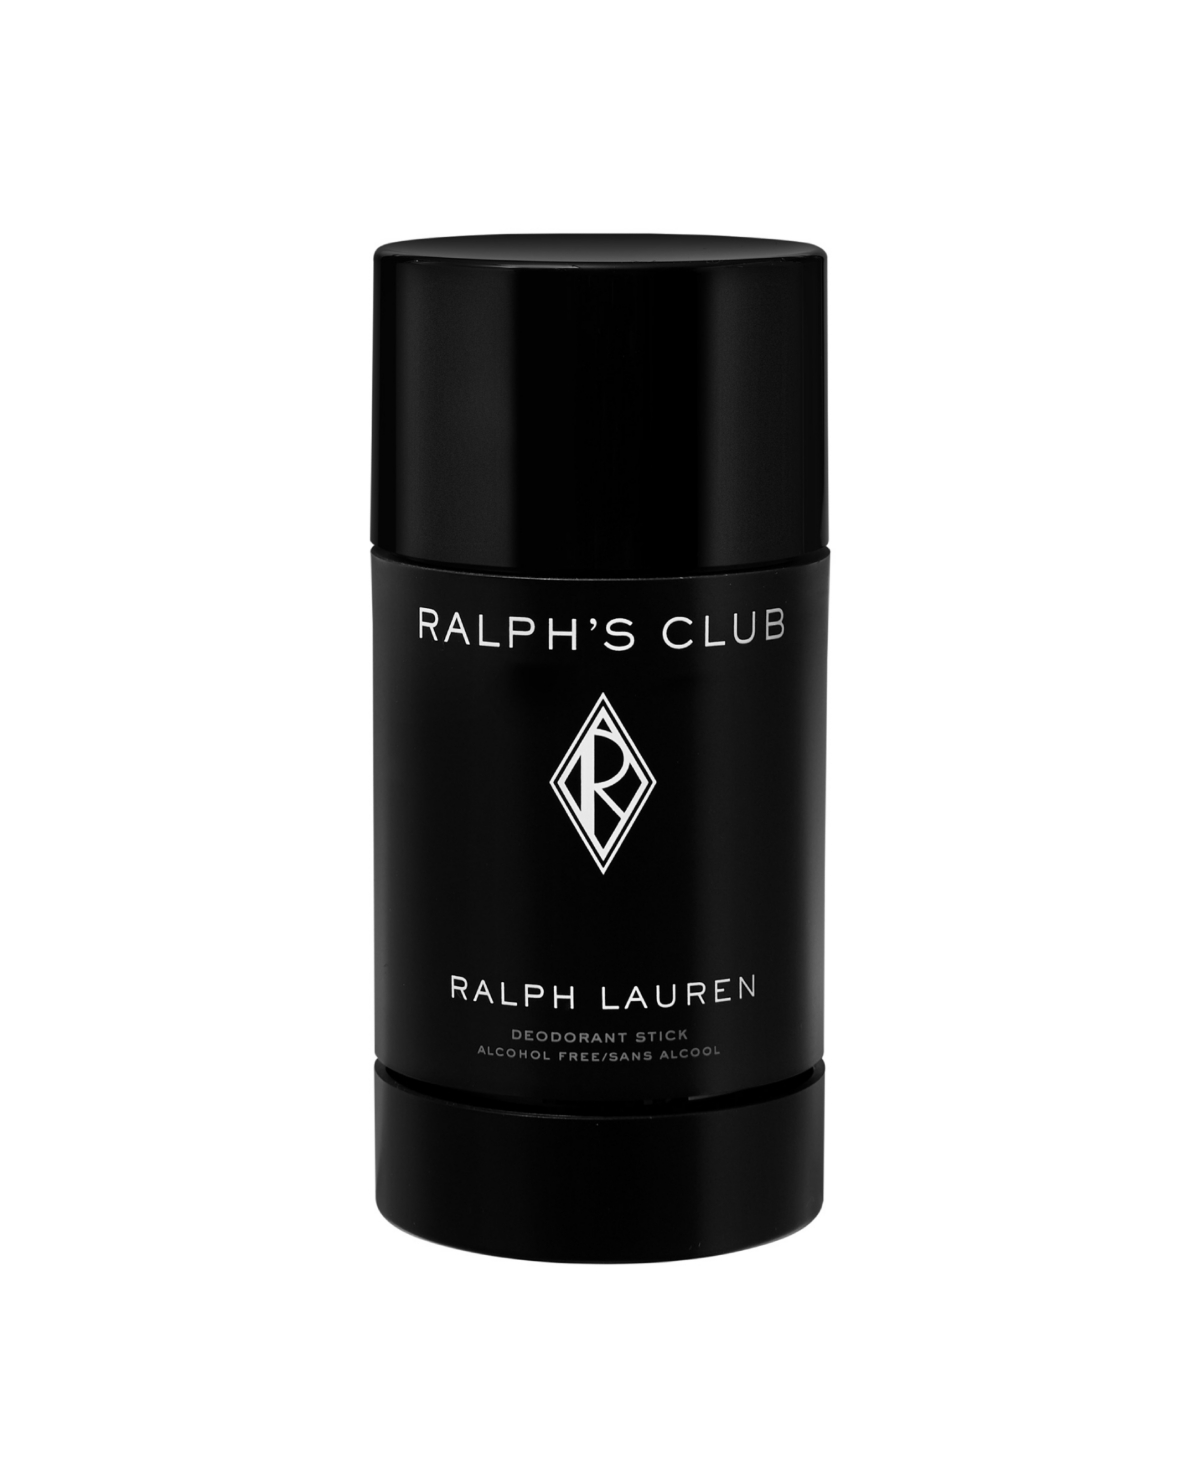 Ralph Lauren Ralph's Club Deodorant Stick,  oz. & Reviews - All Grooming  - Beauty - Macy's